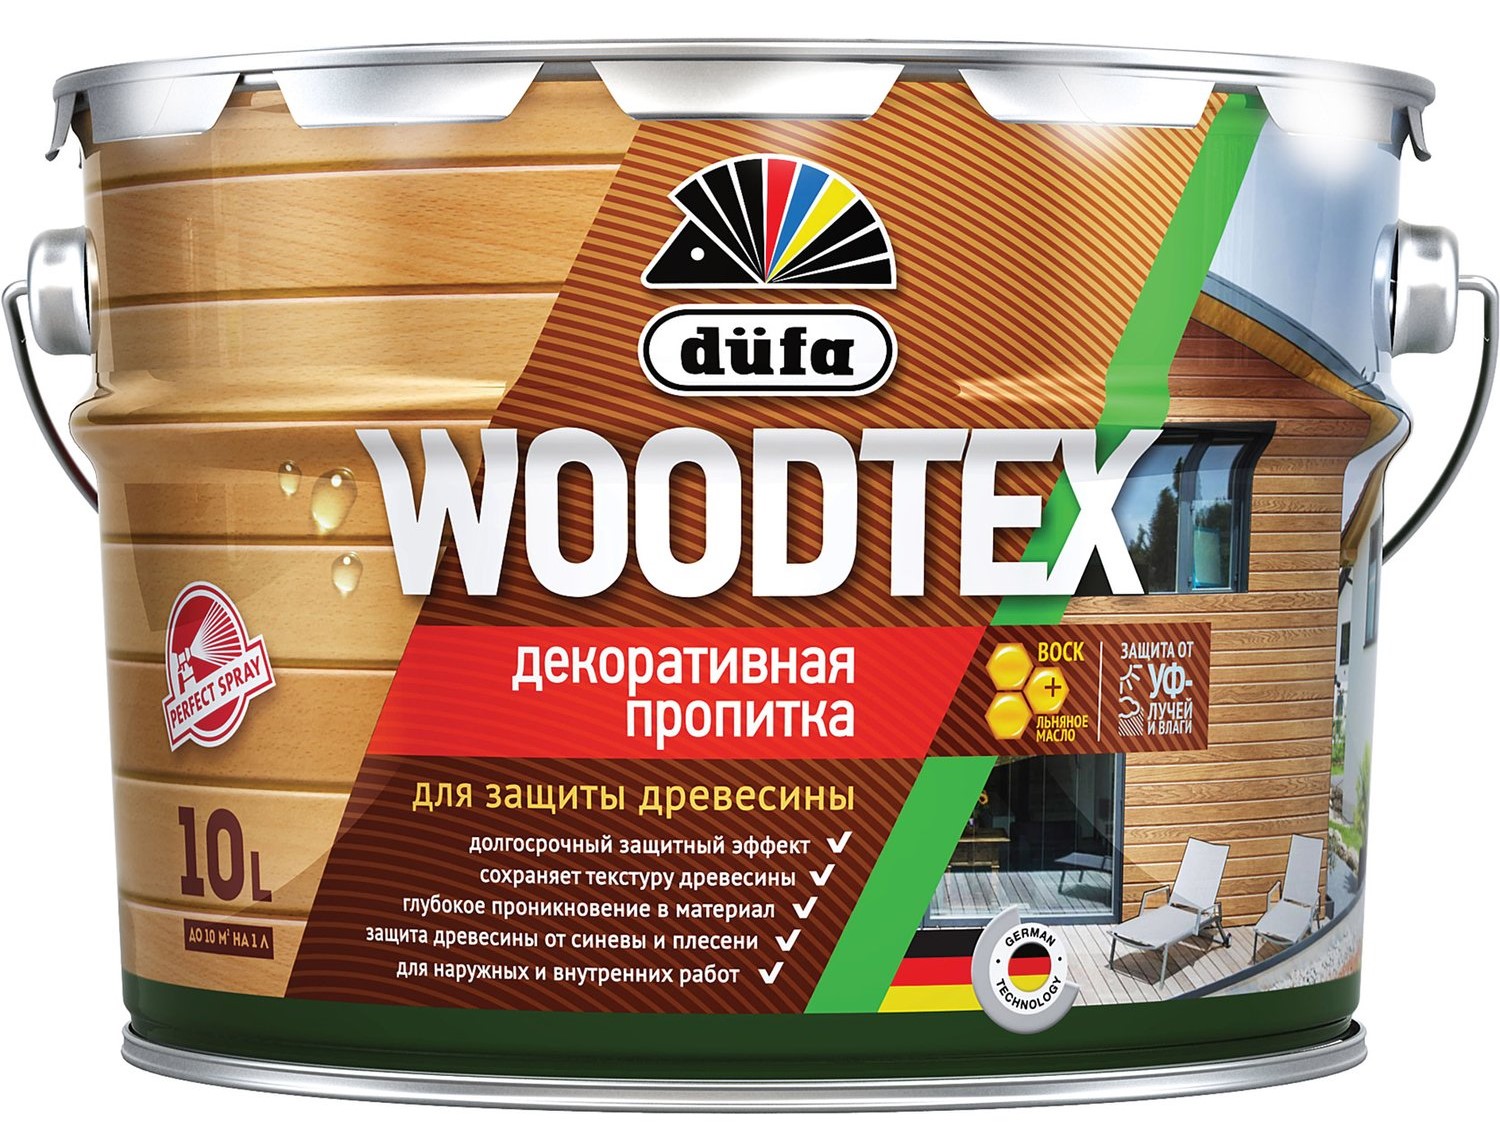 Купить Dufa Woodtex, 3 л